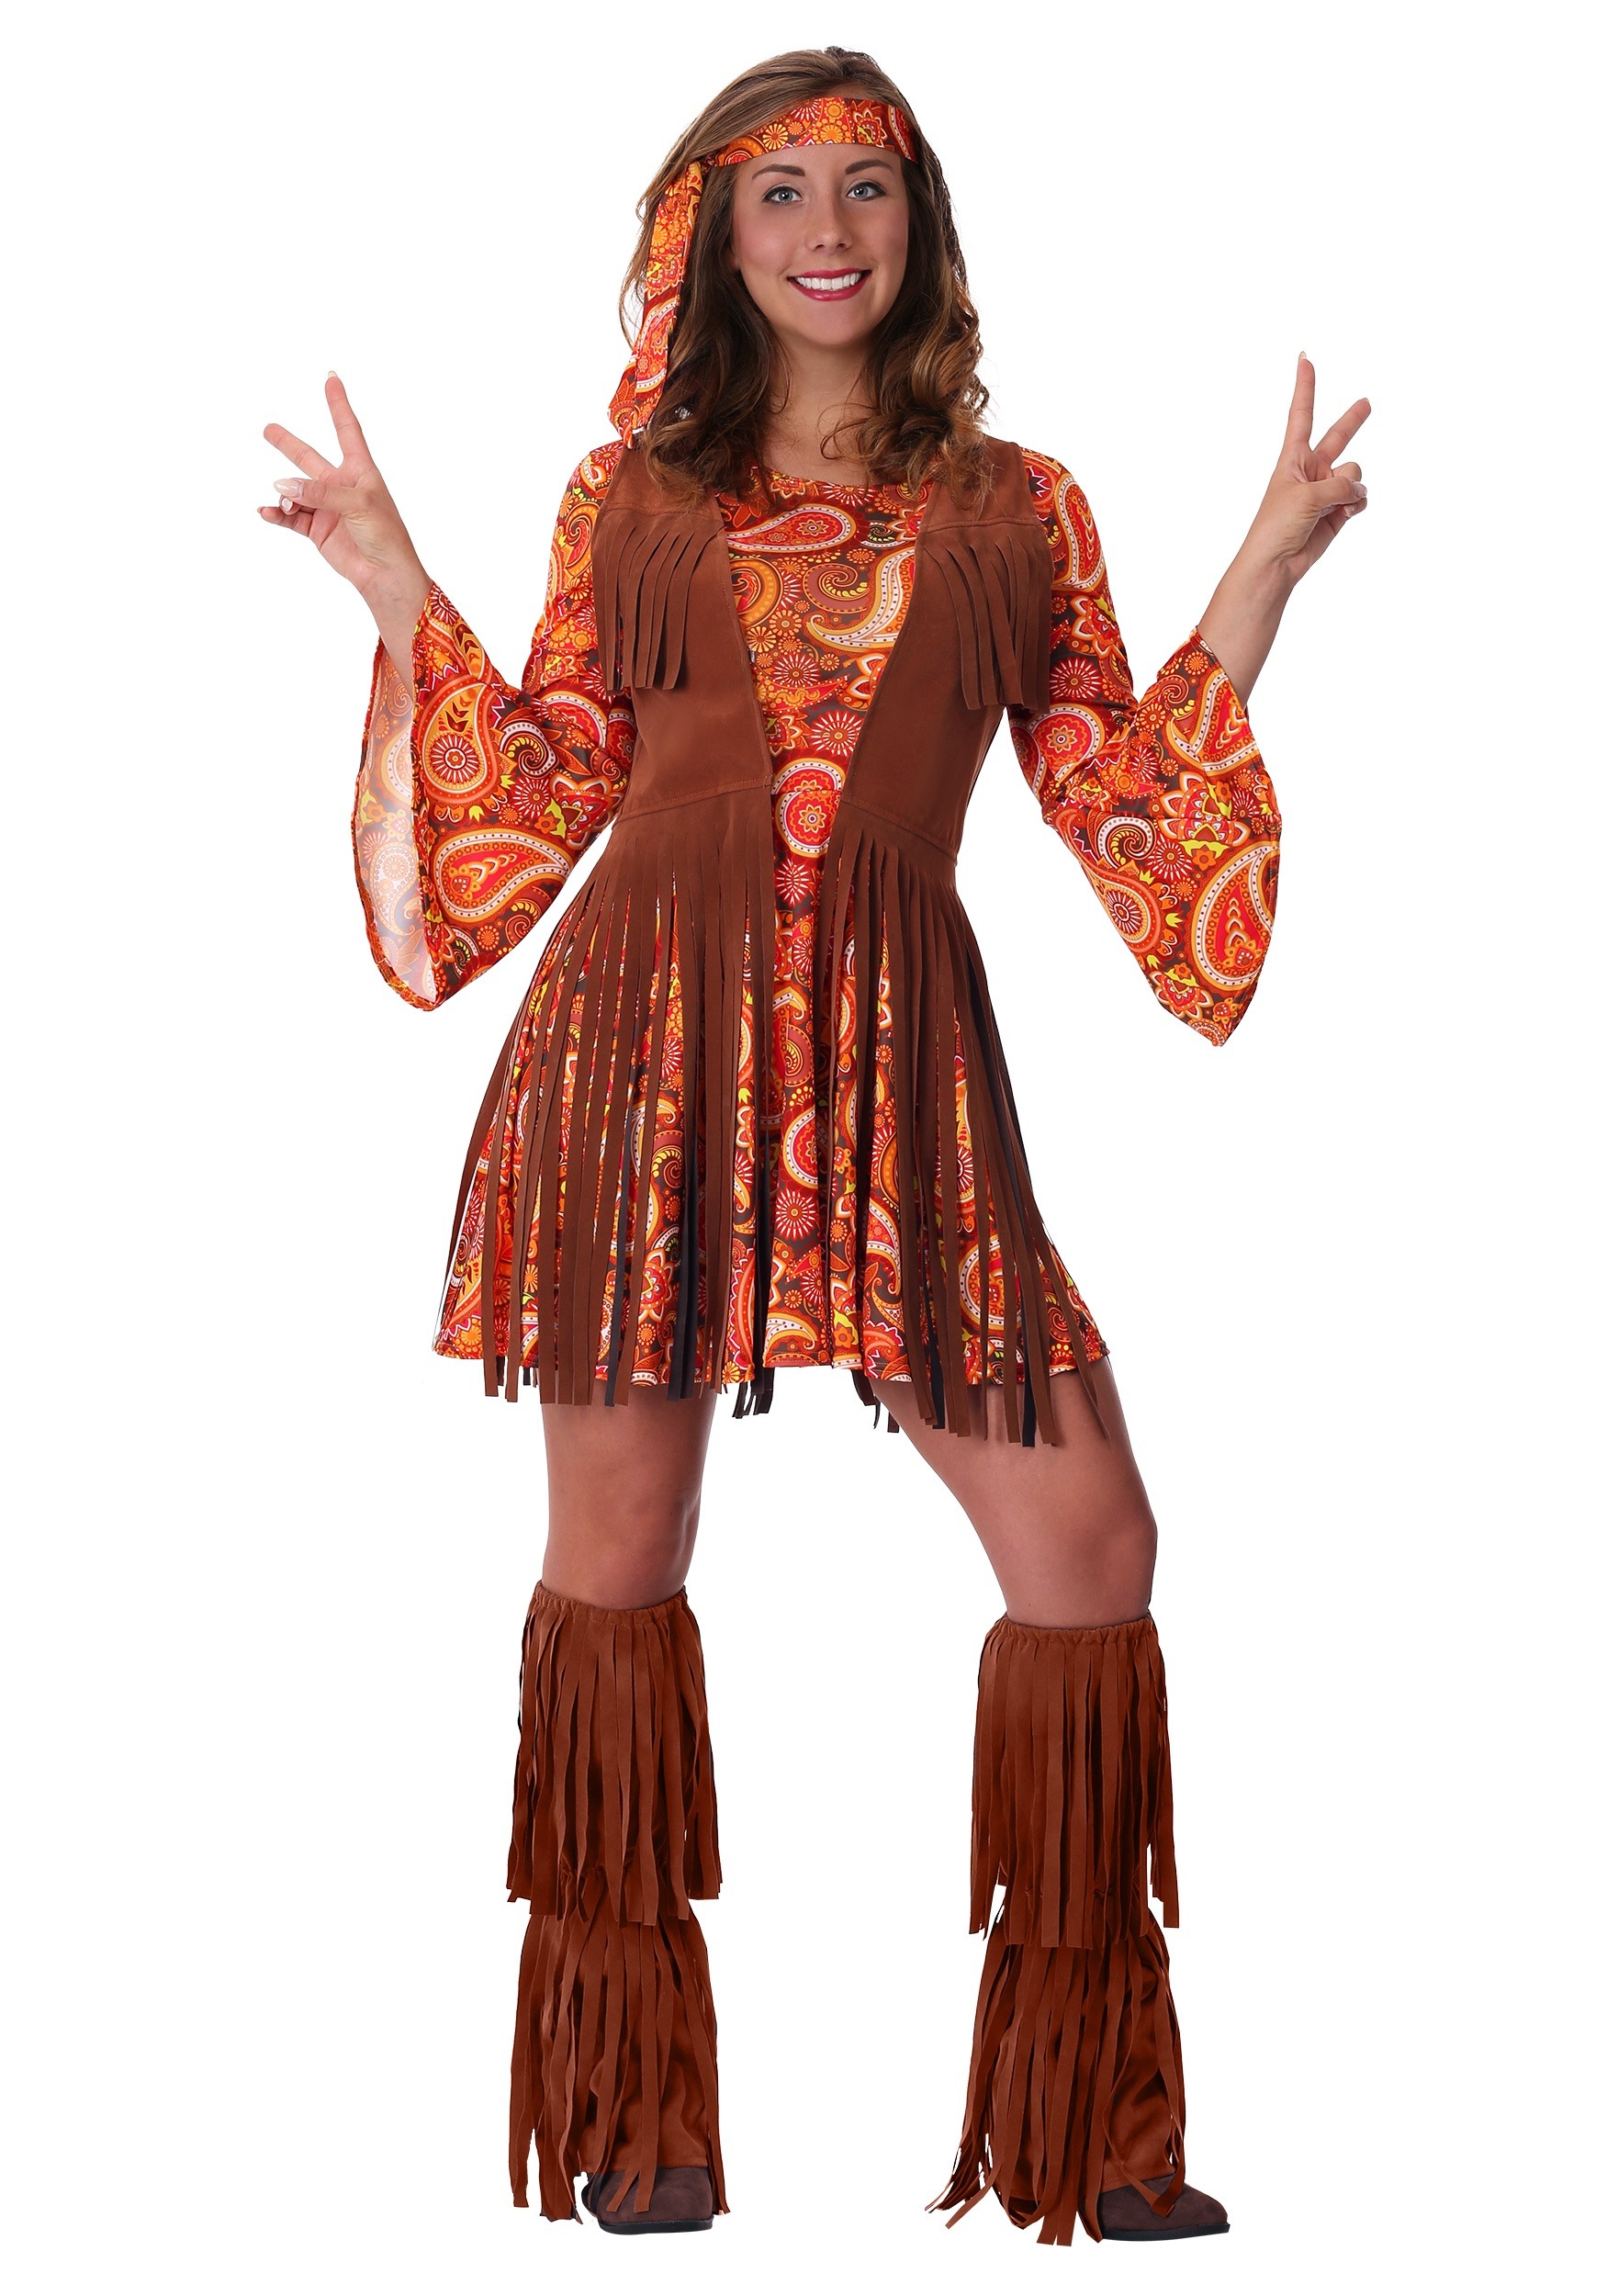 Photos - Fancy Dress FUN Costumes Plus Size Fringe Hippie Women's Costume Orange/Yellow FUN